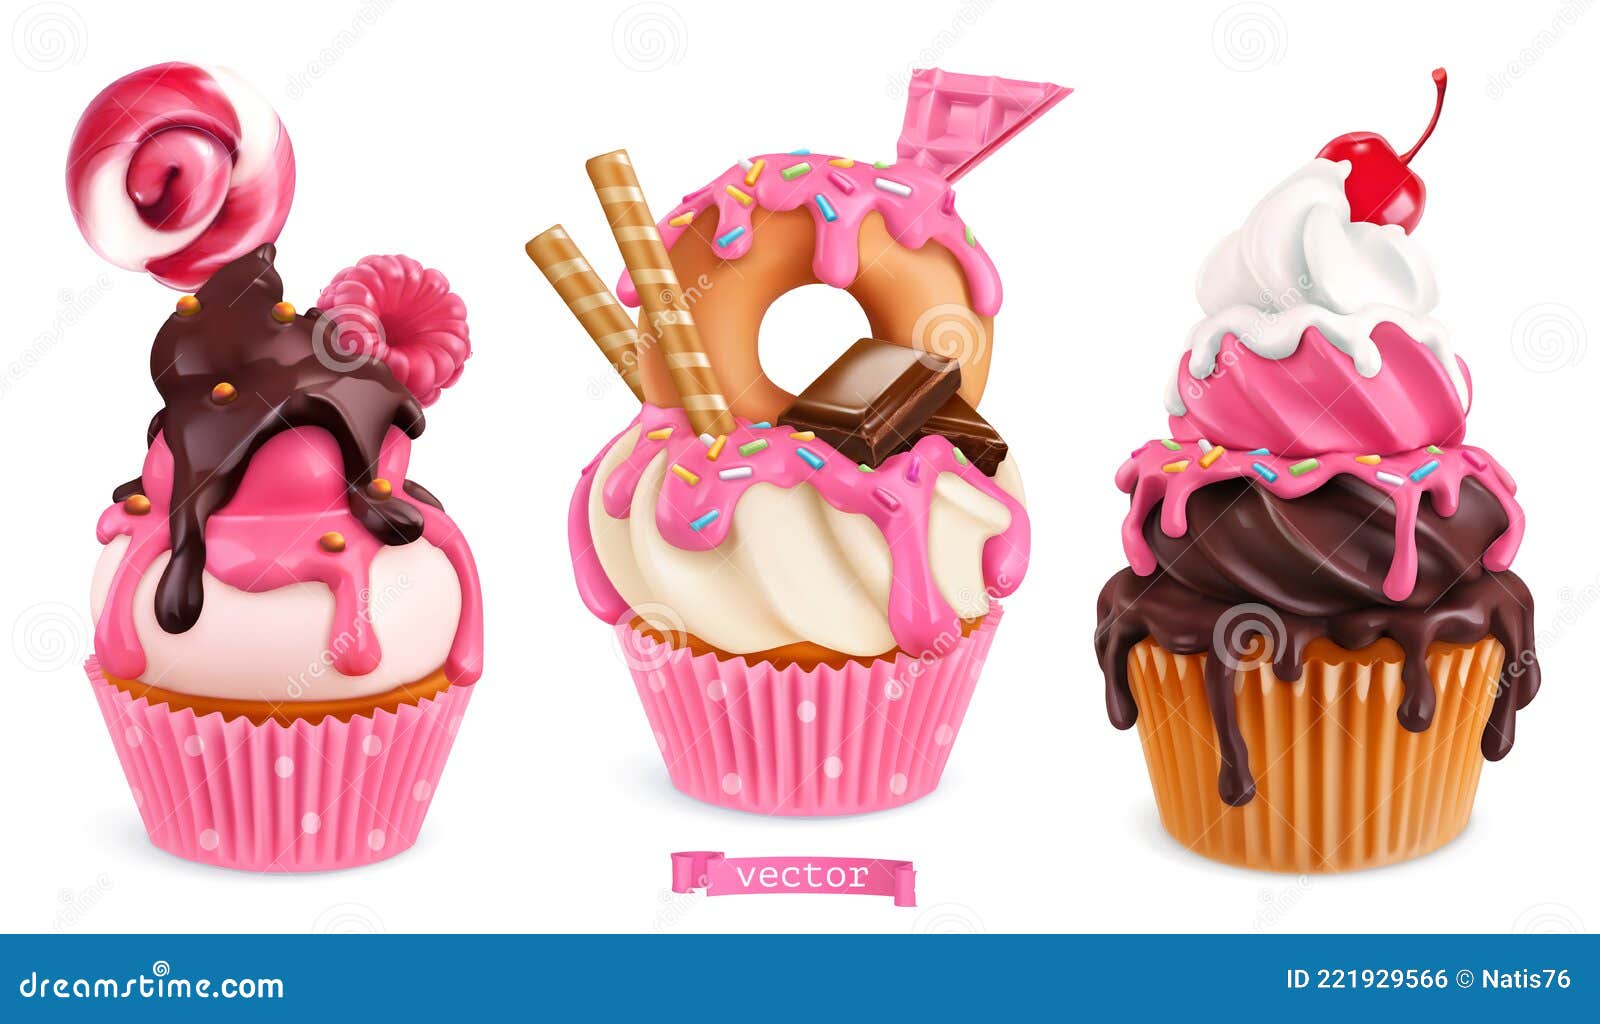 cupcakes with raspberries, donut, chocolate